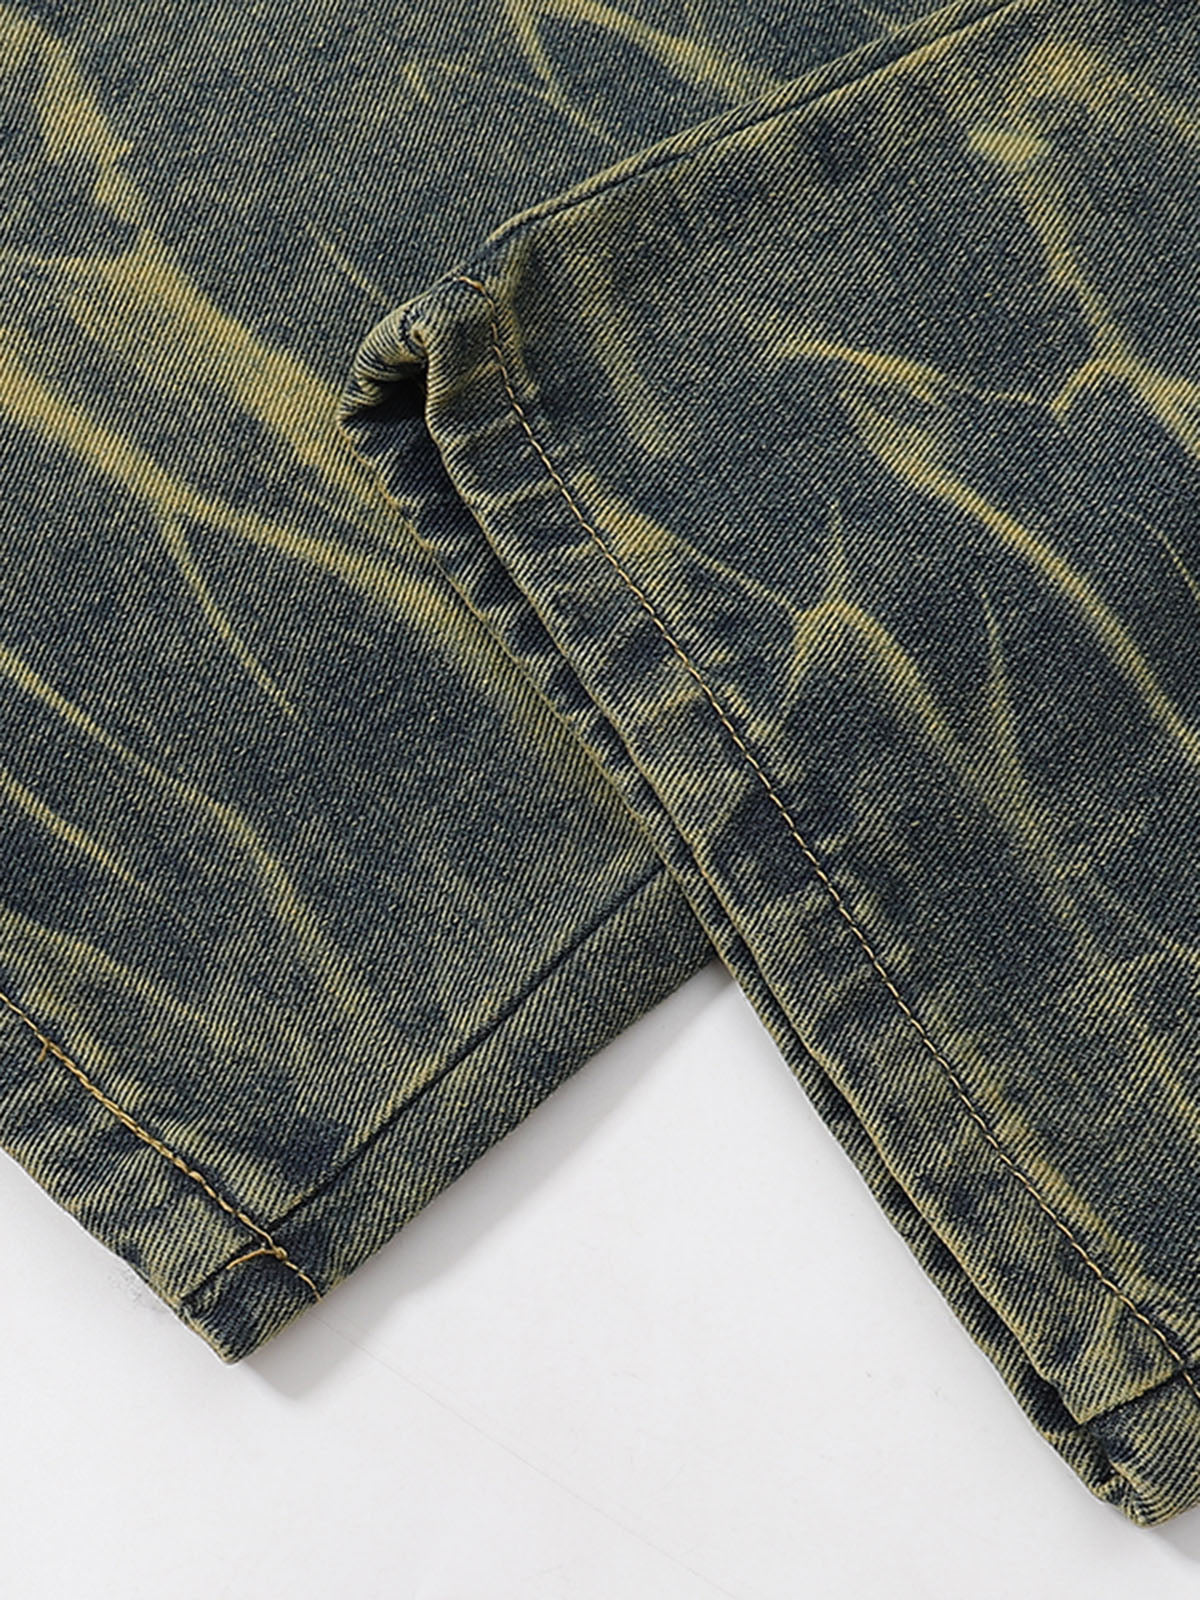 UNKNOWN ALLURE© Water Ripple Distressed Printed Denim Jeans